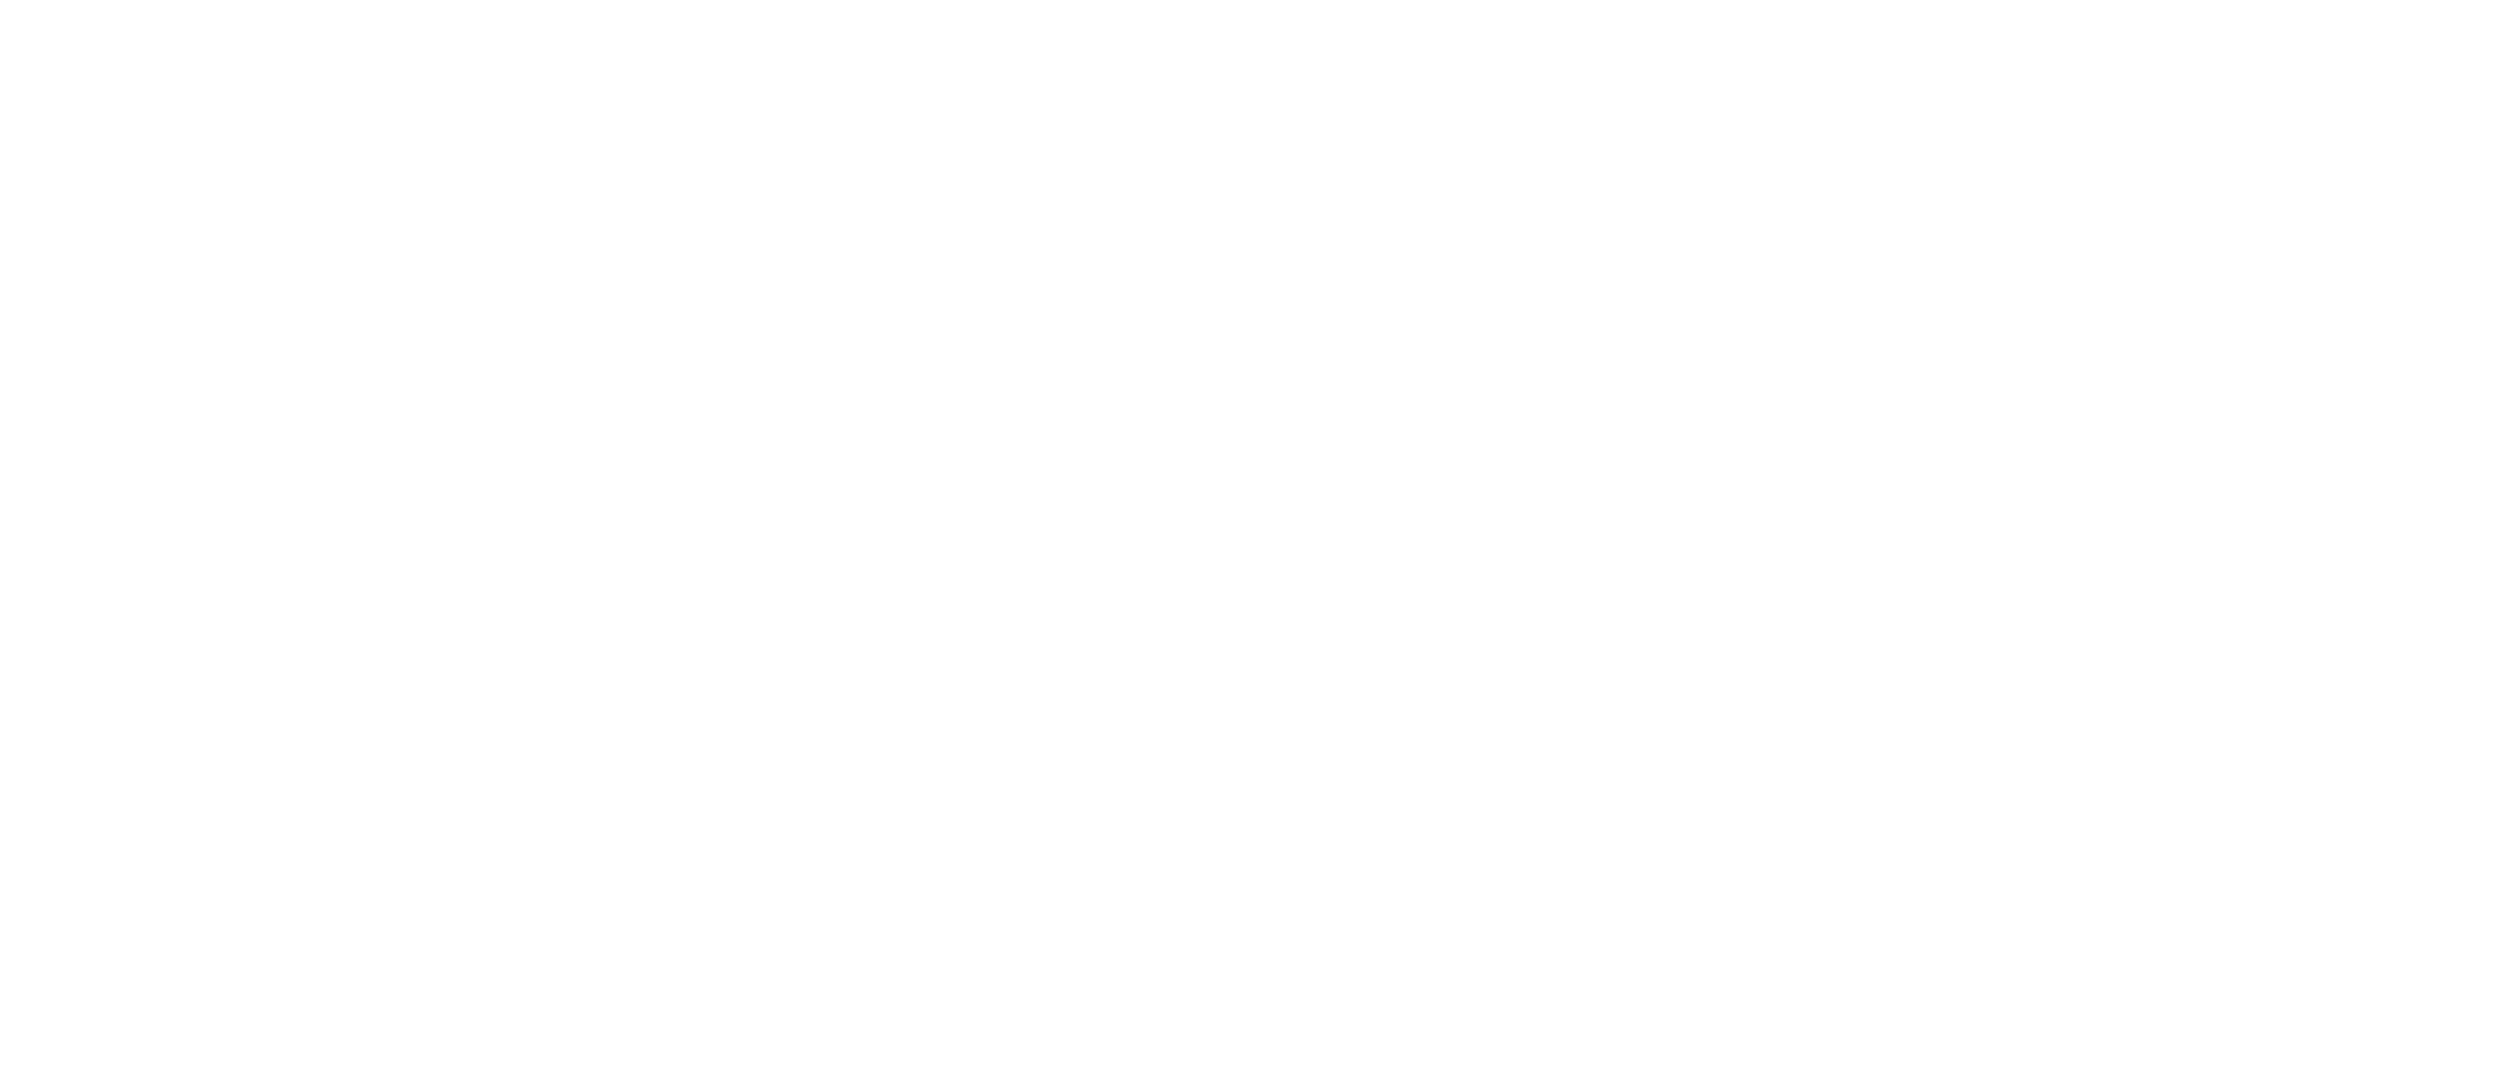 ROI формула — иллюстрация ANDATA